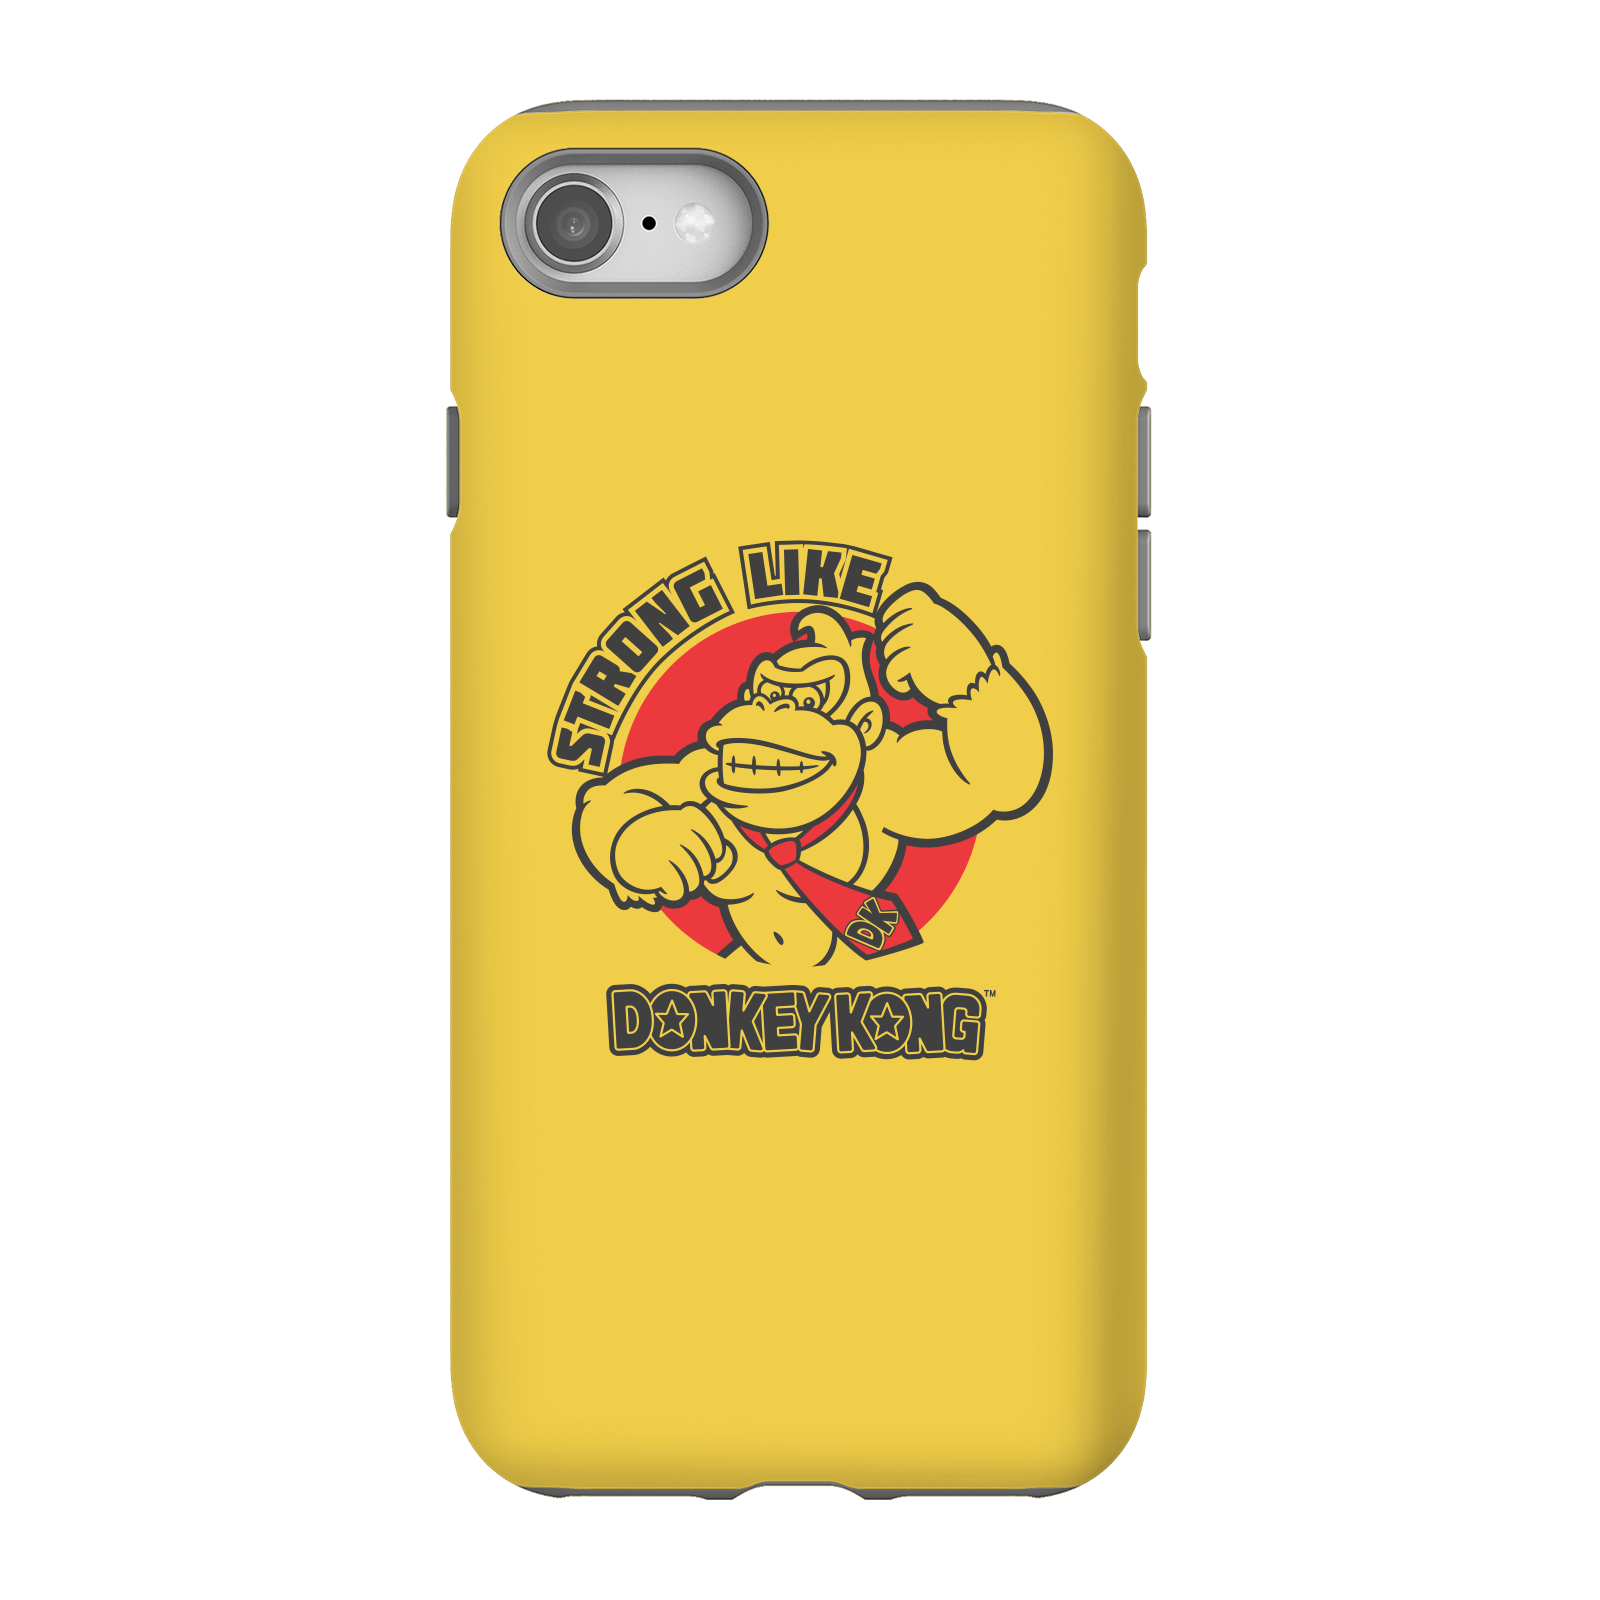 Nintendo Donkey Kong Strong Like Donkey Kong Phone Case - iPhone 8 - Tough Case - Gloss